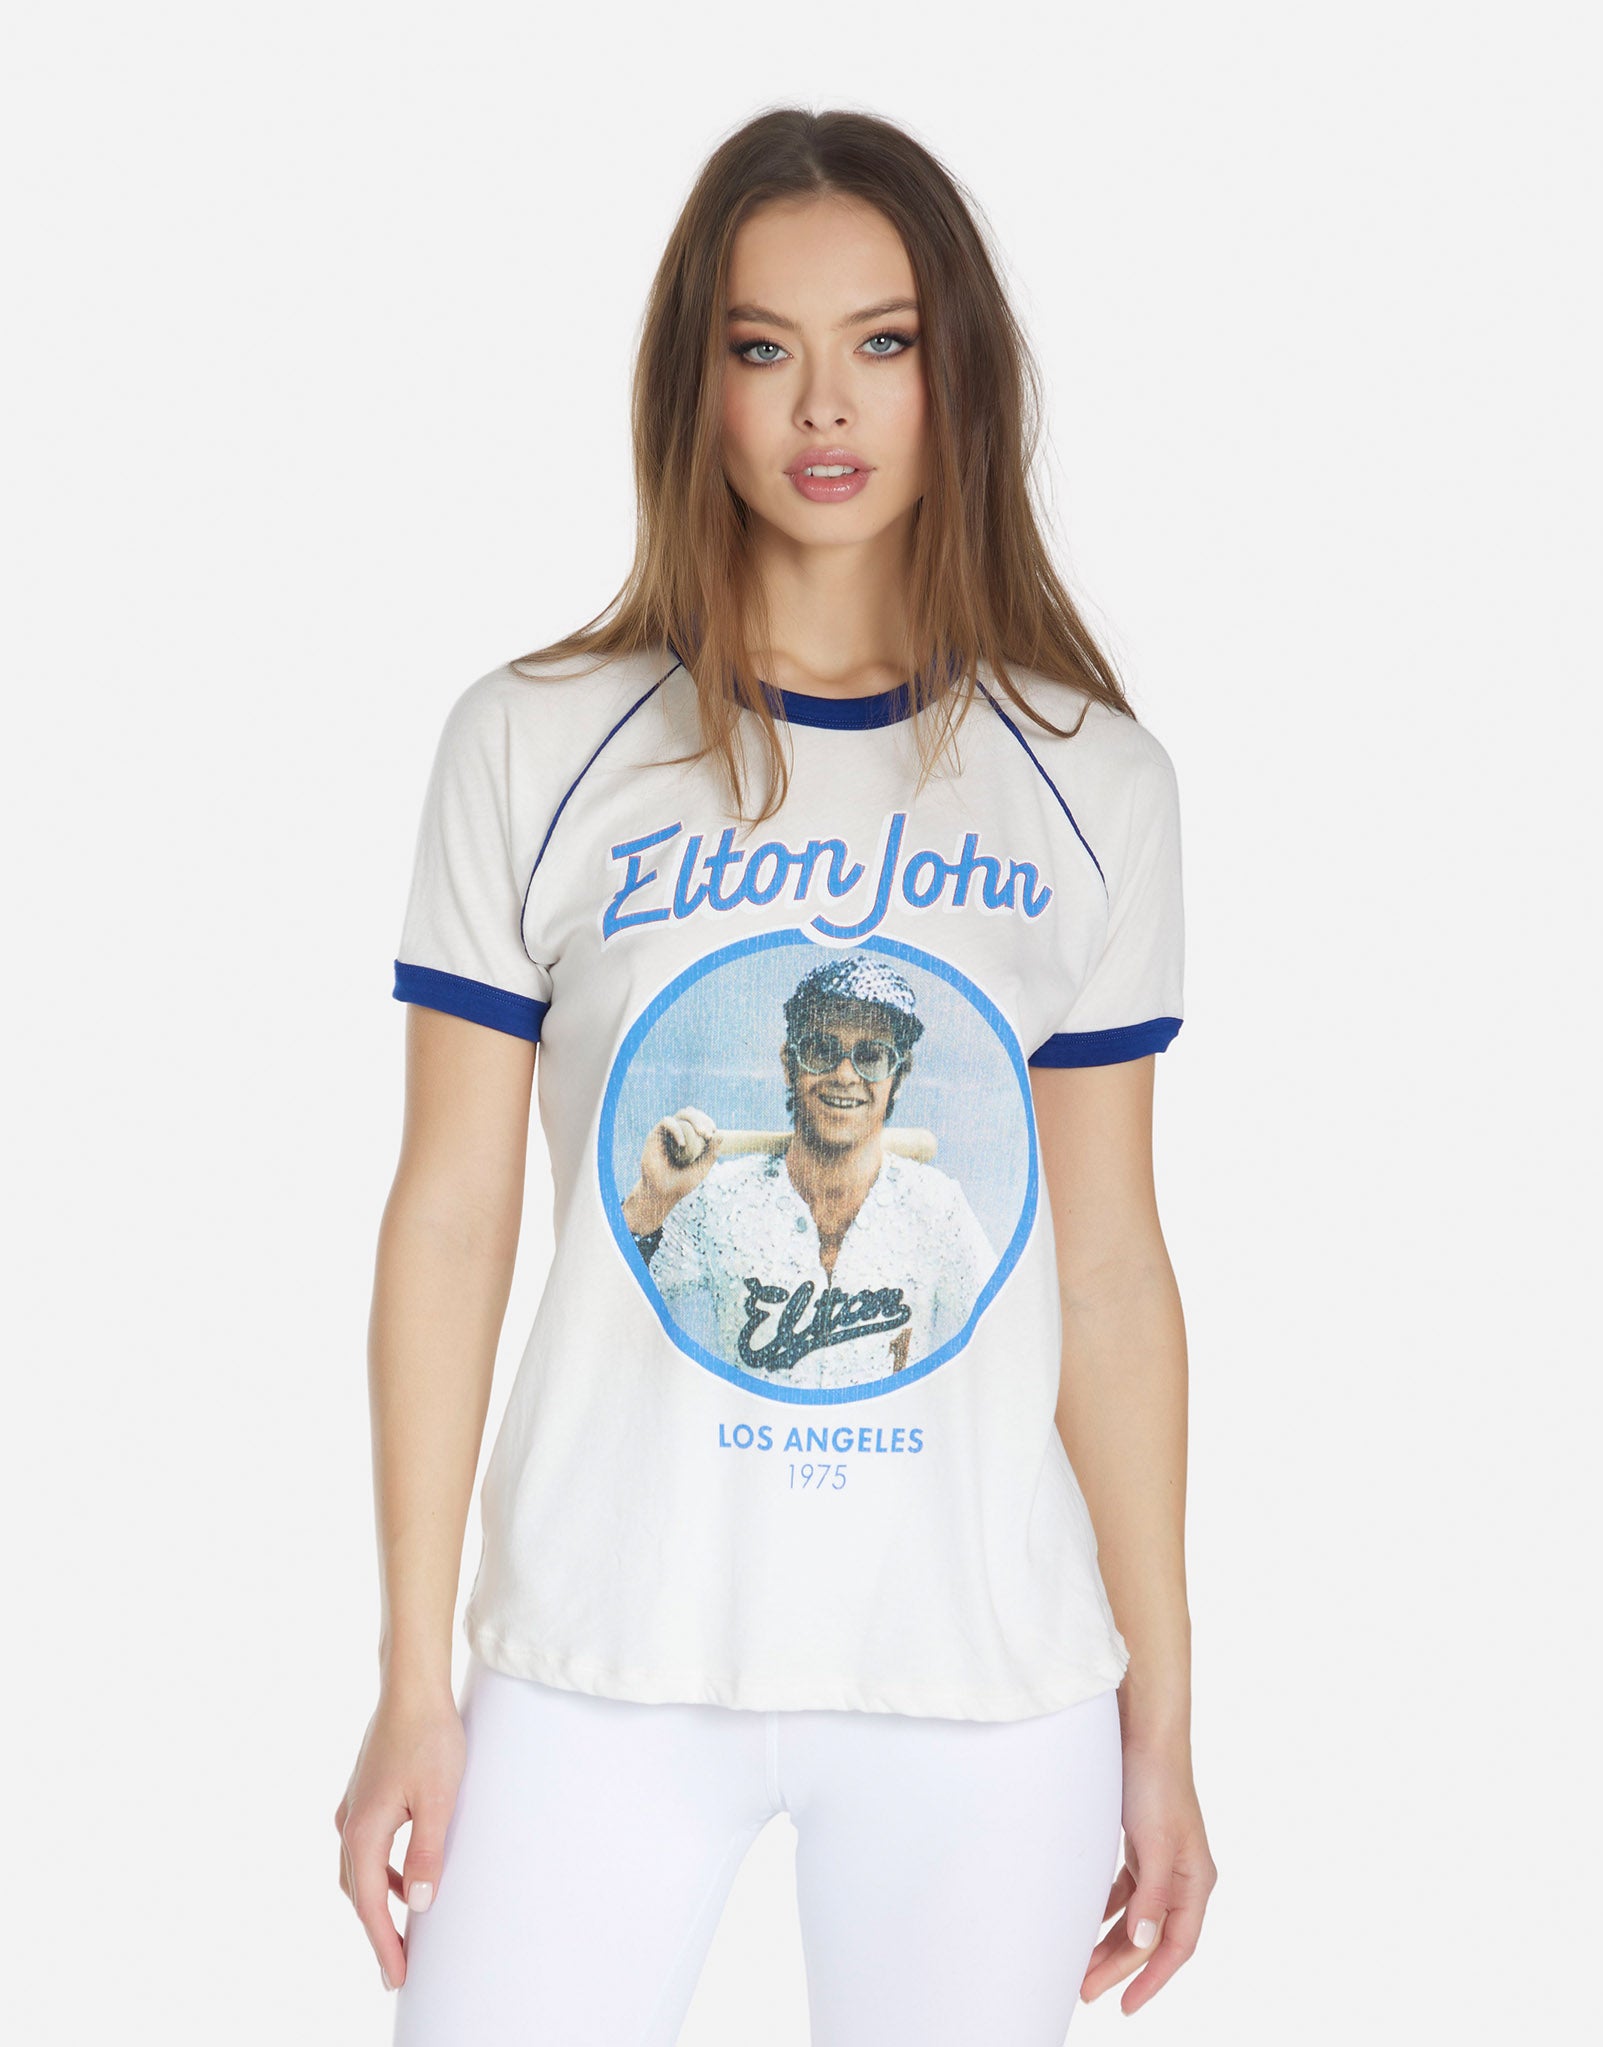 Brice Elton John Dodgers